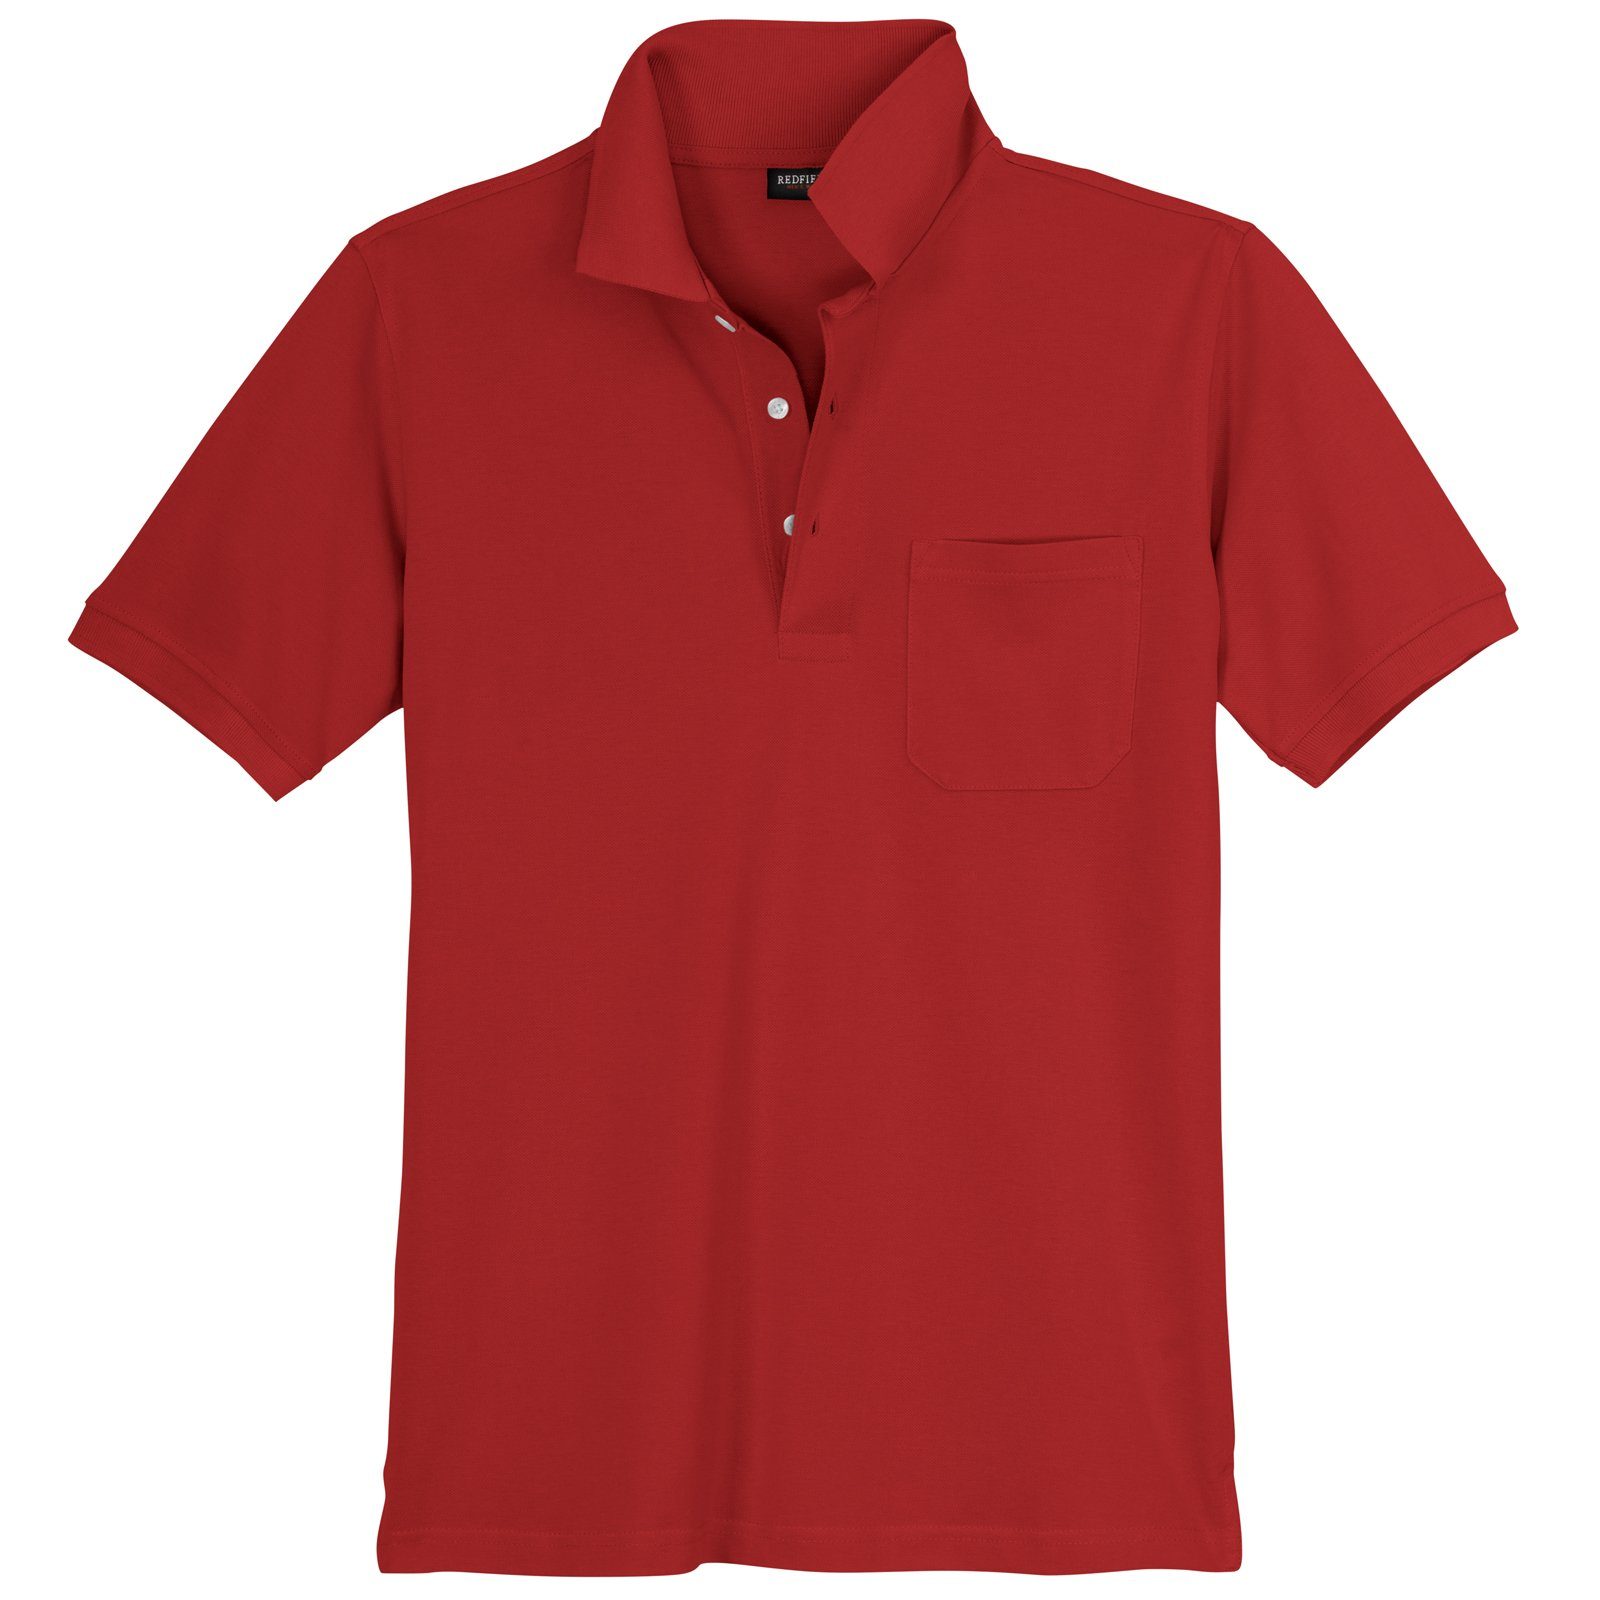 rot Größen Redfield redfield Poloshirt Poloshirt Ralph Herren Basic Große